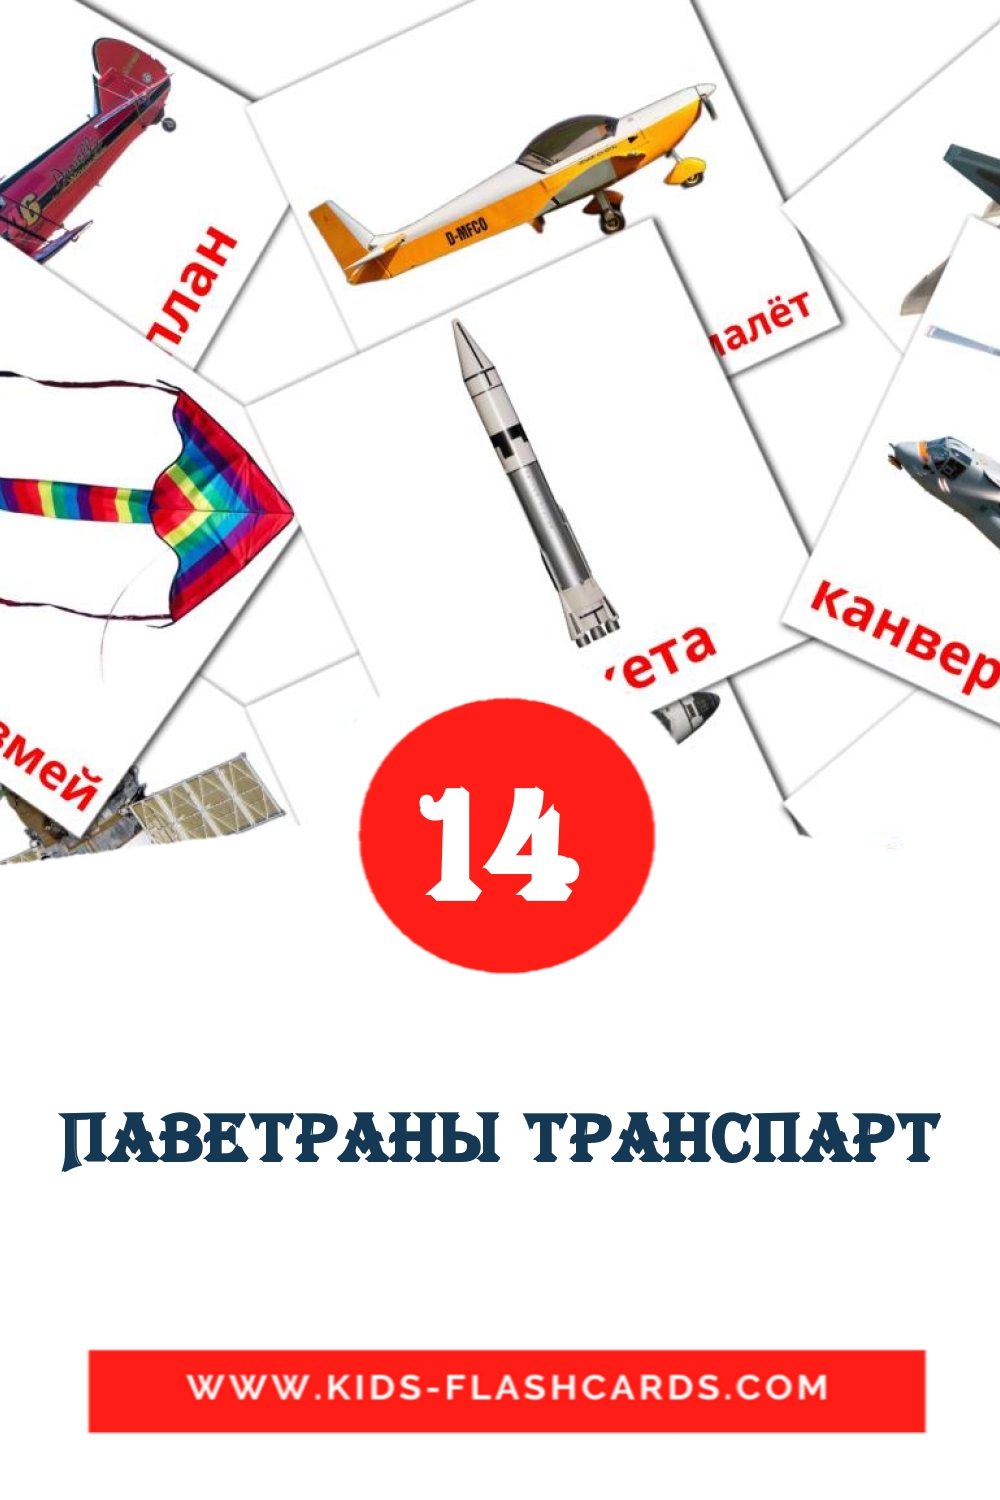 14 carte illustrate di Паветраны транспарт per la scuola materna in bielorusso